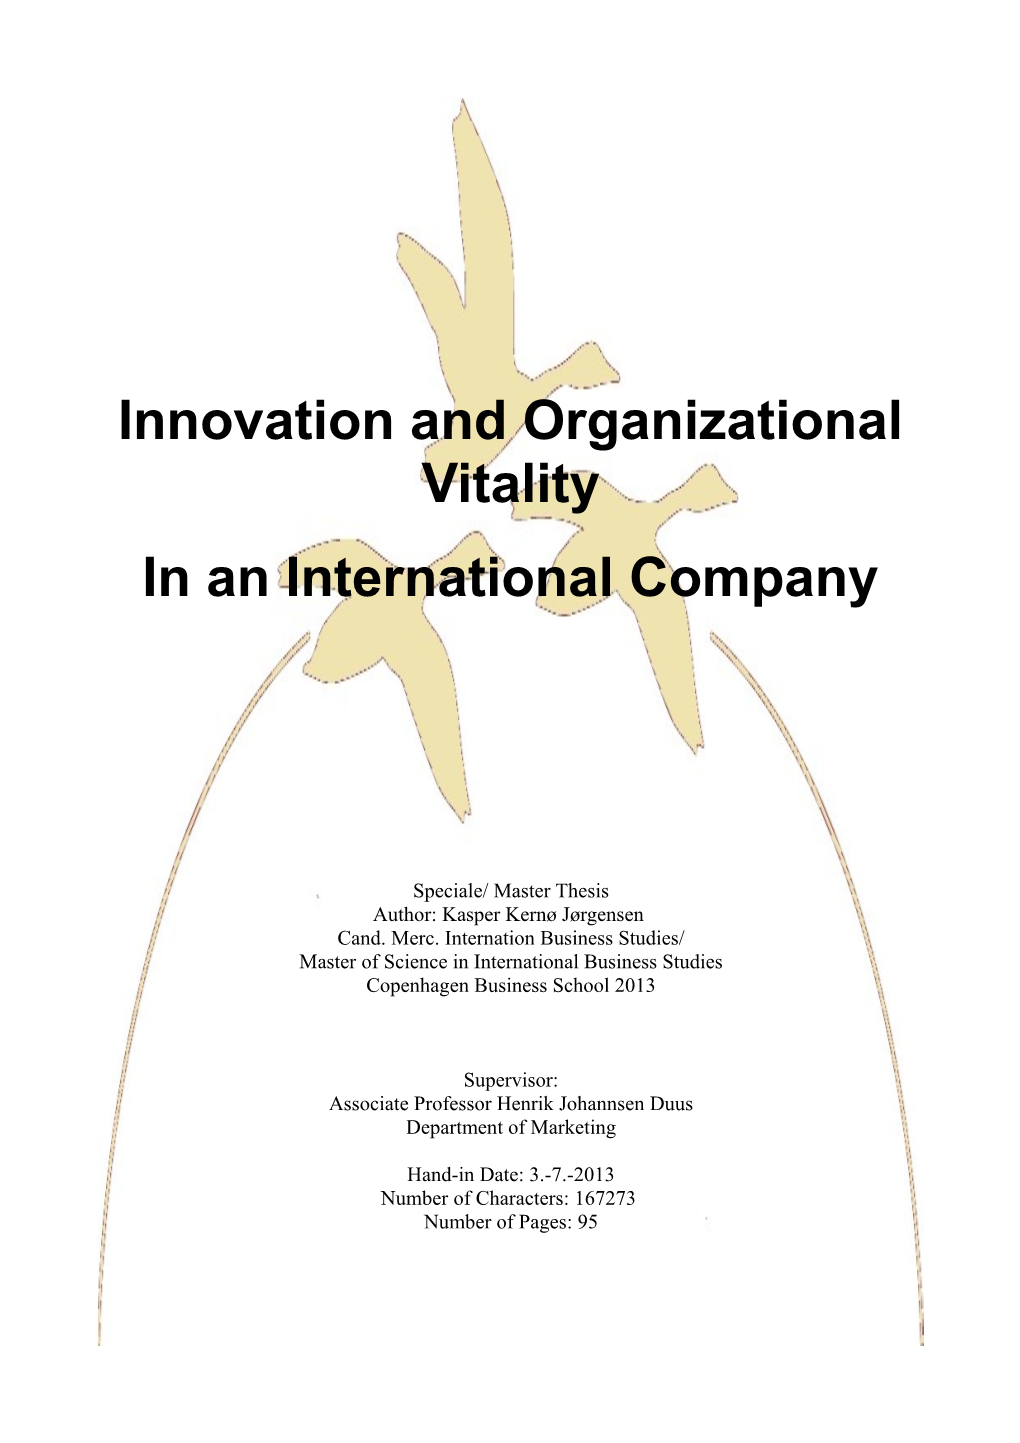 Innovation and Organizational Vitality in an International Company